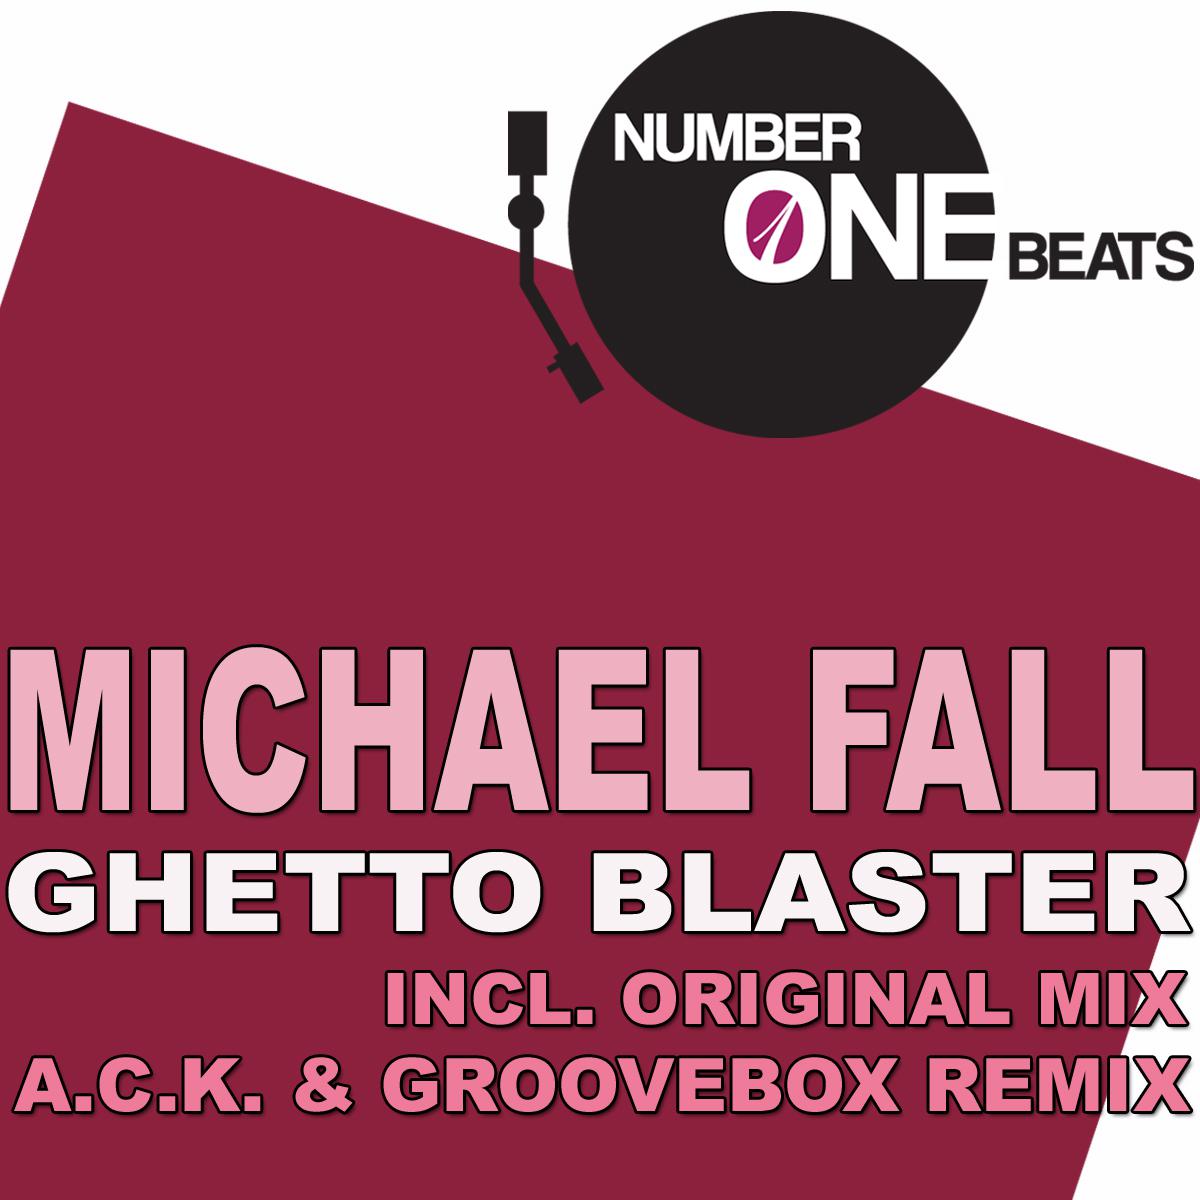 Michael Fall - Ghetto Blaster (Radio Mix)